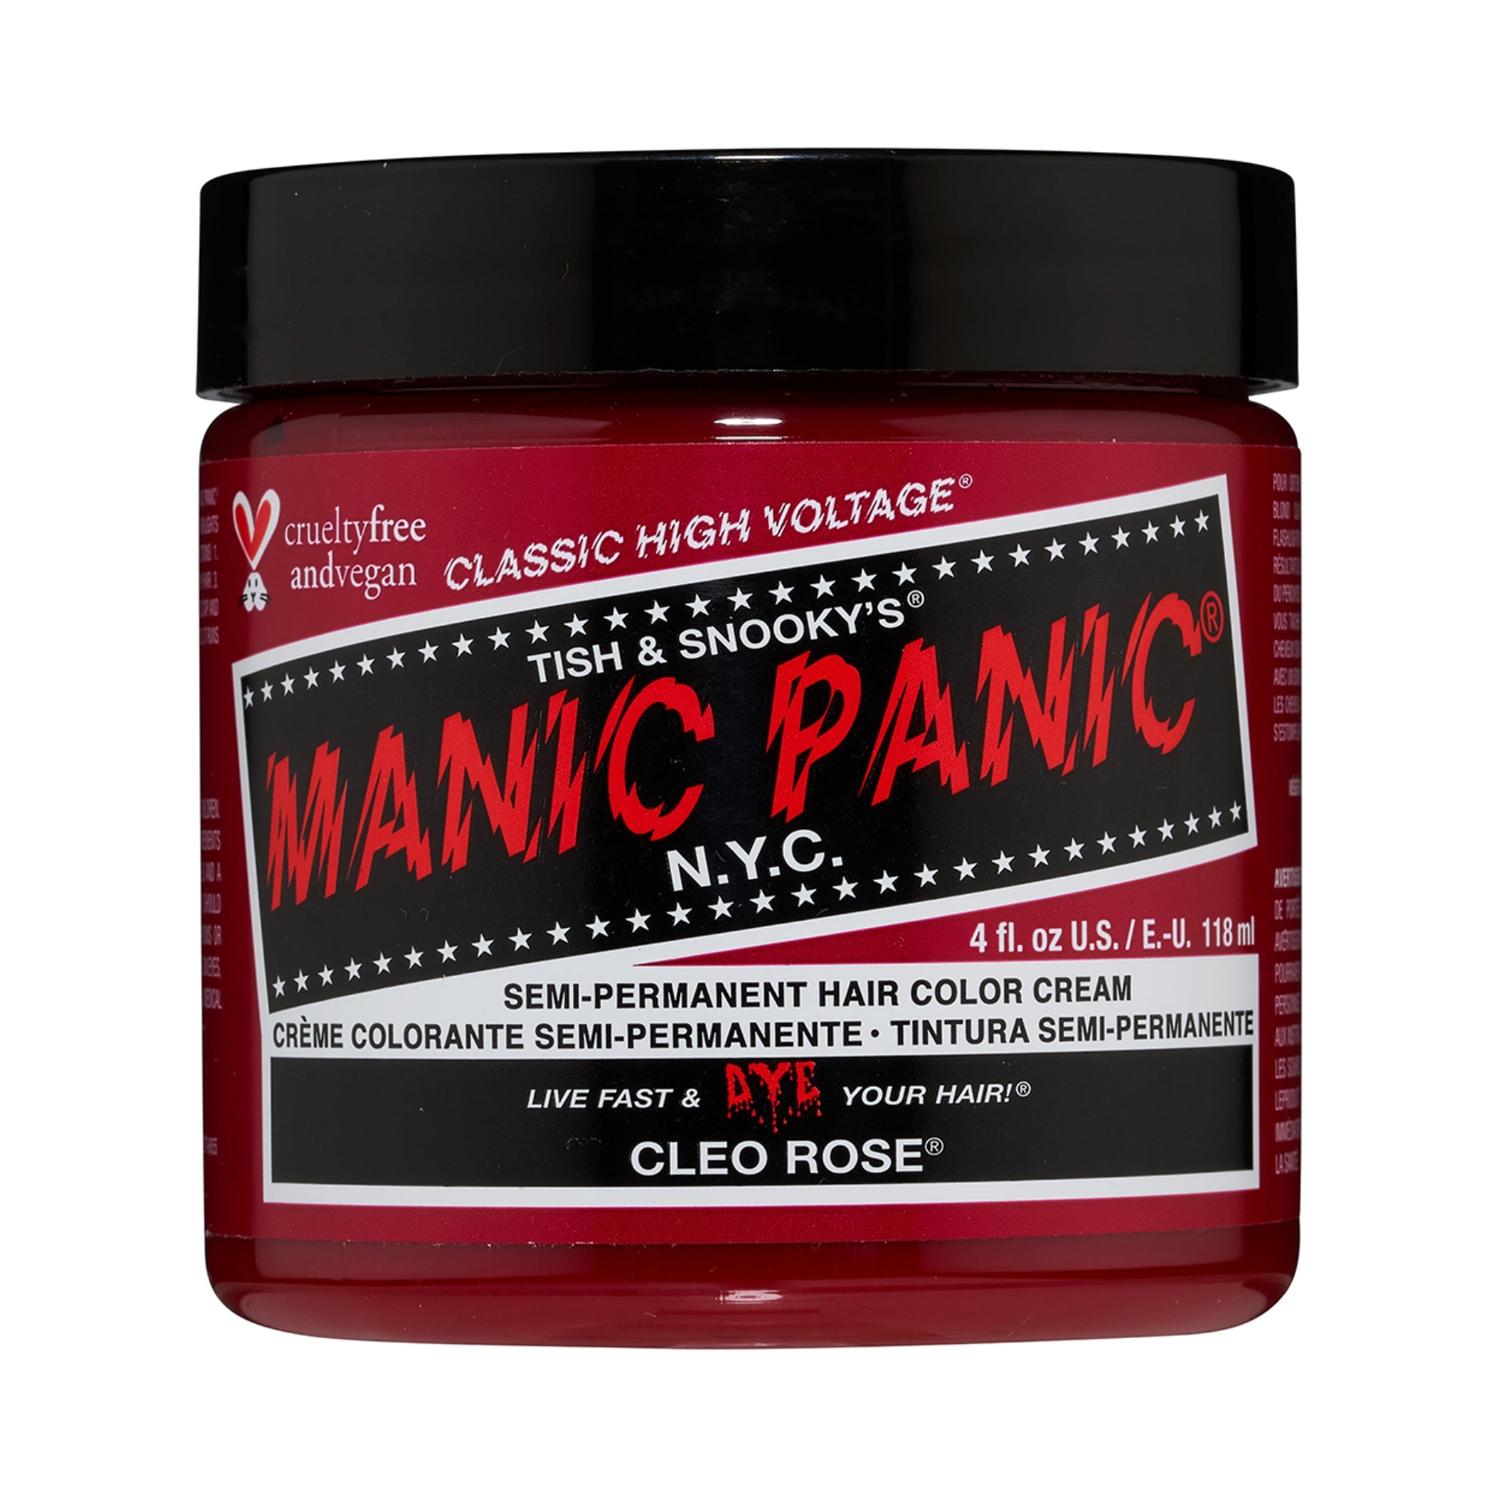 manic panic classic high voltage semi permanent hair color cream - cleo rose (118ml)